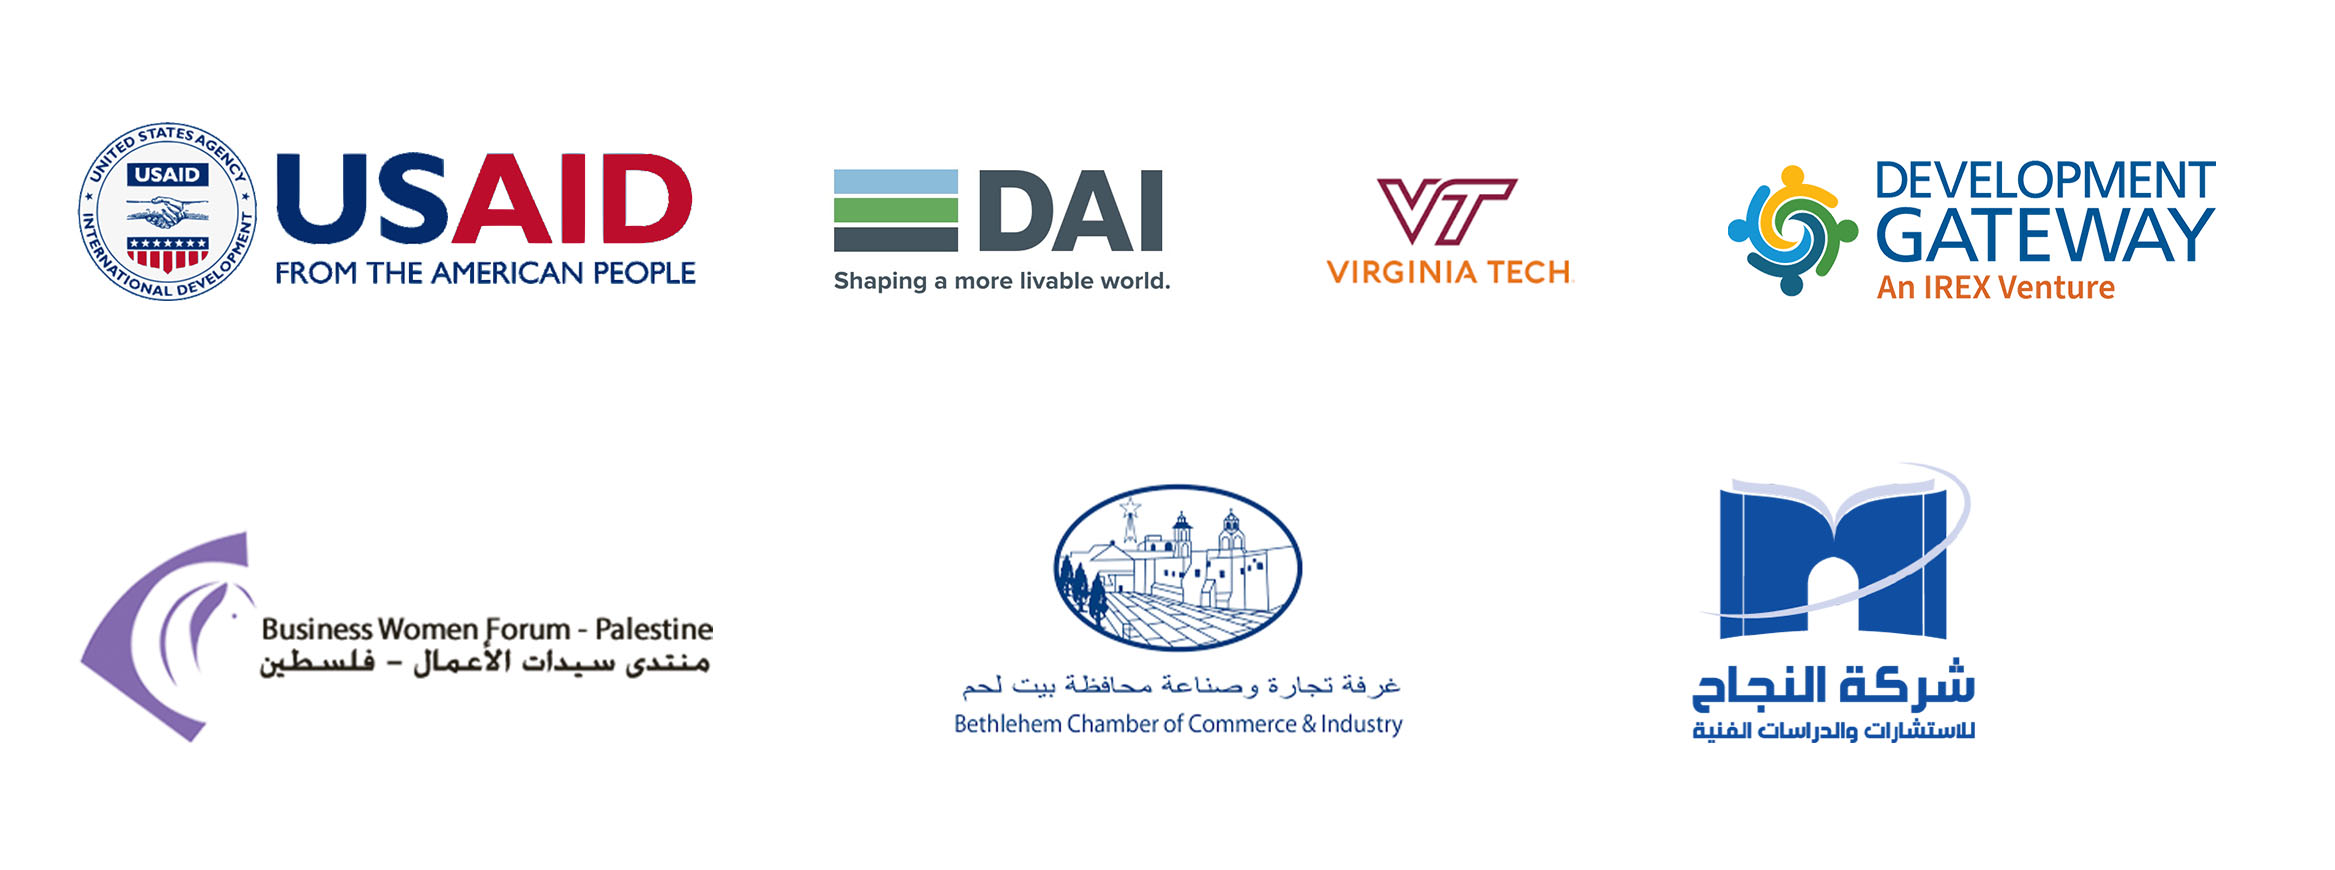 Logos - USAID, DAI, Virginia Tech, Development Gateway, Business Women Forum Palestine, Bethlehem Chamber of Commerce and Industry,  An-Najah University Energy Resource Center.